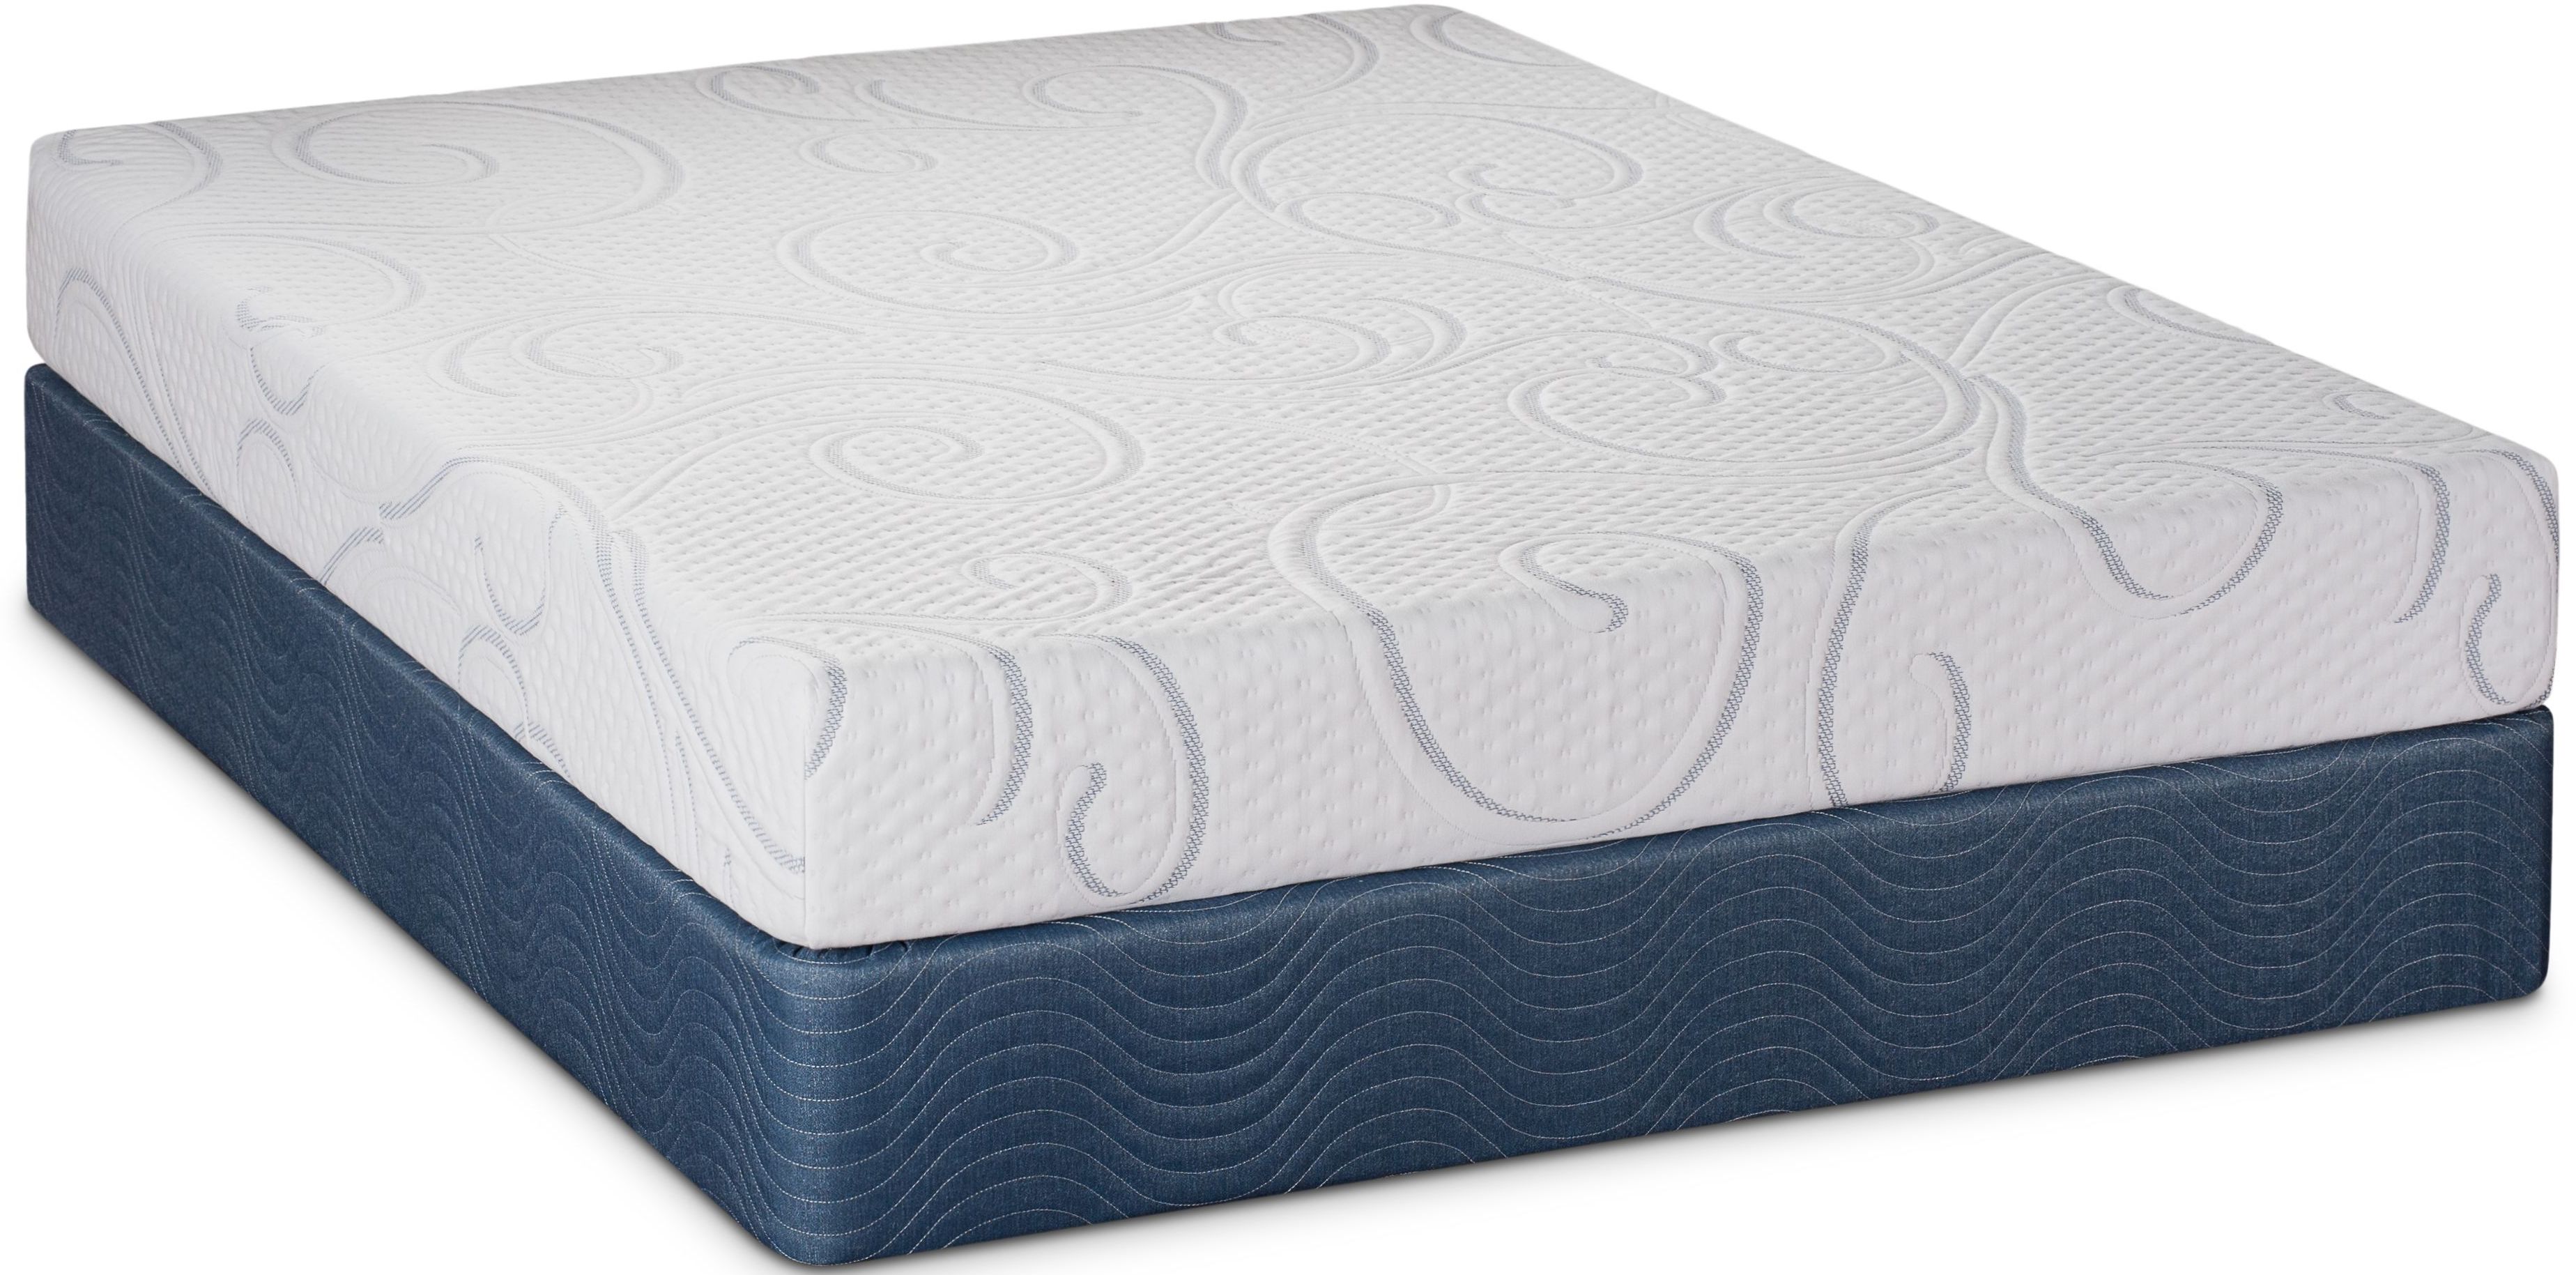 restonic 3 memory fiber foam mattress topper reviews